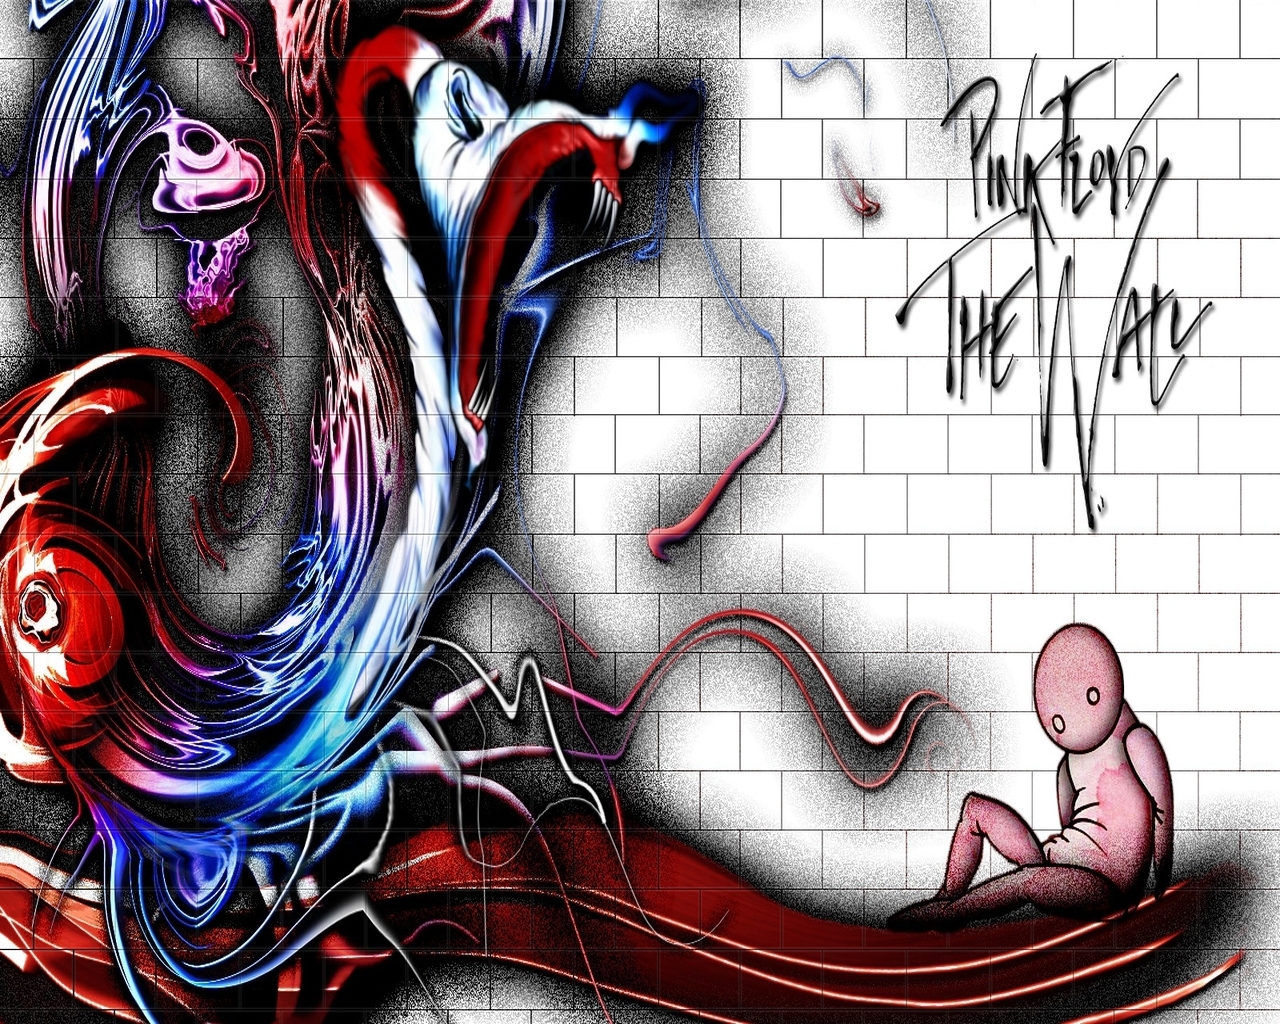 Pink Floyd The Wall Wallpaper 1080p - HD Wallpaper 